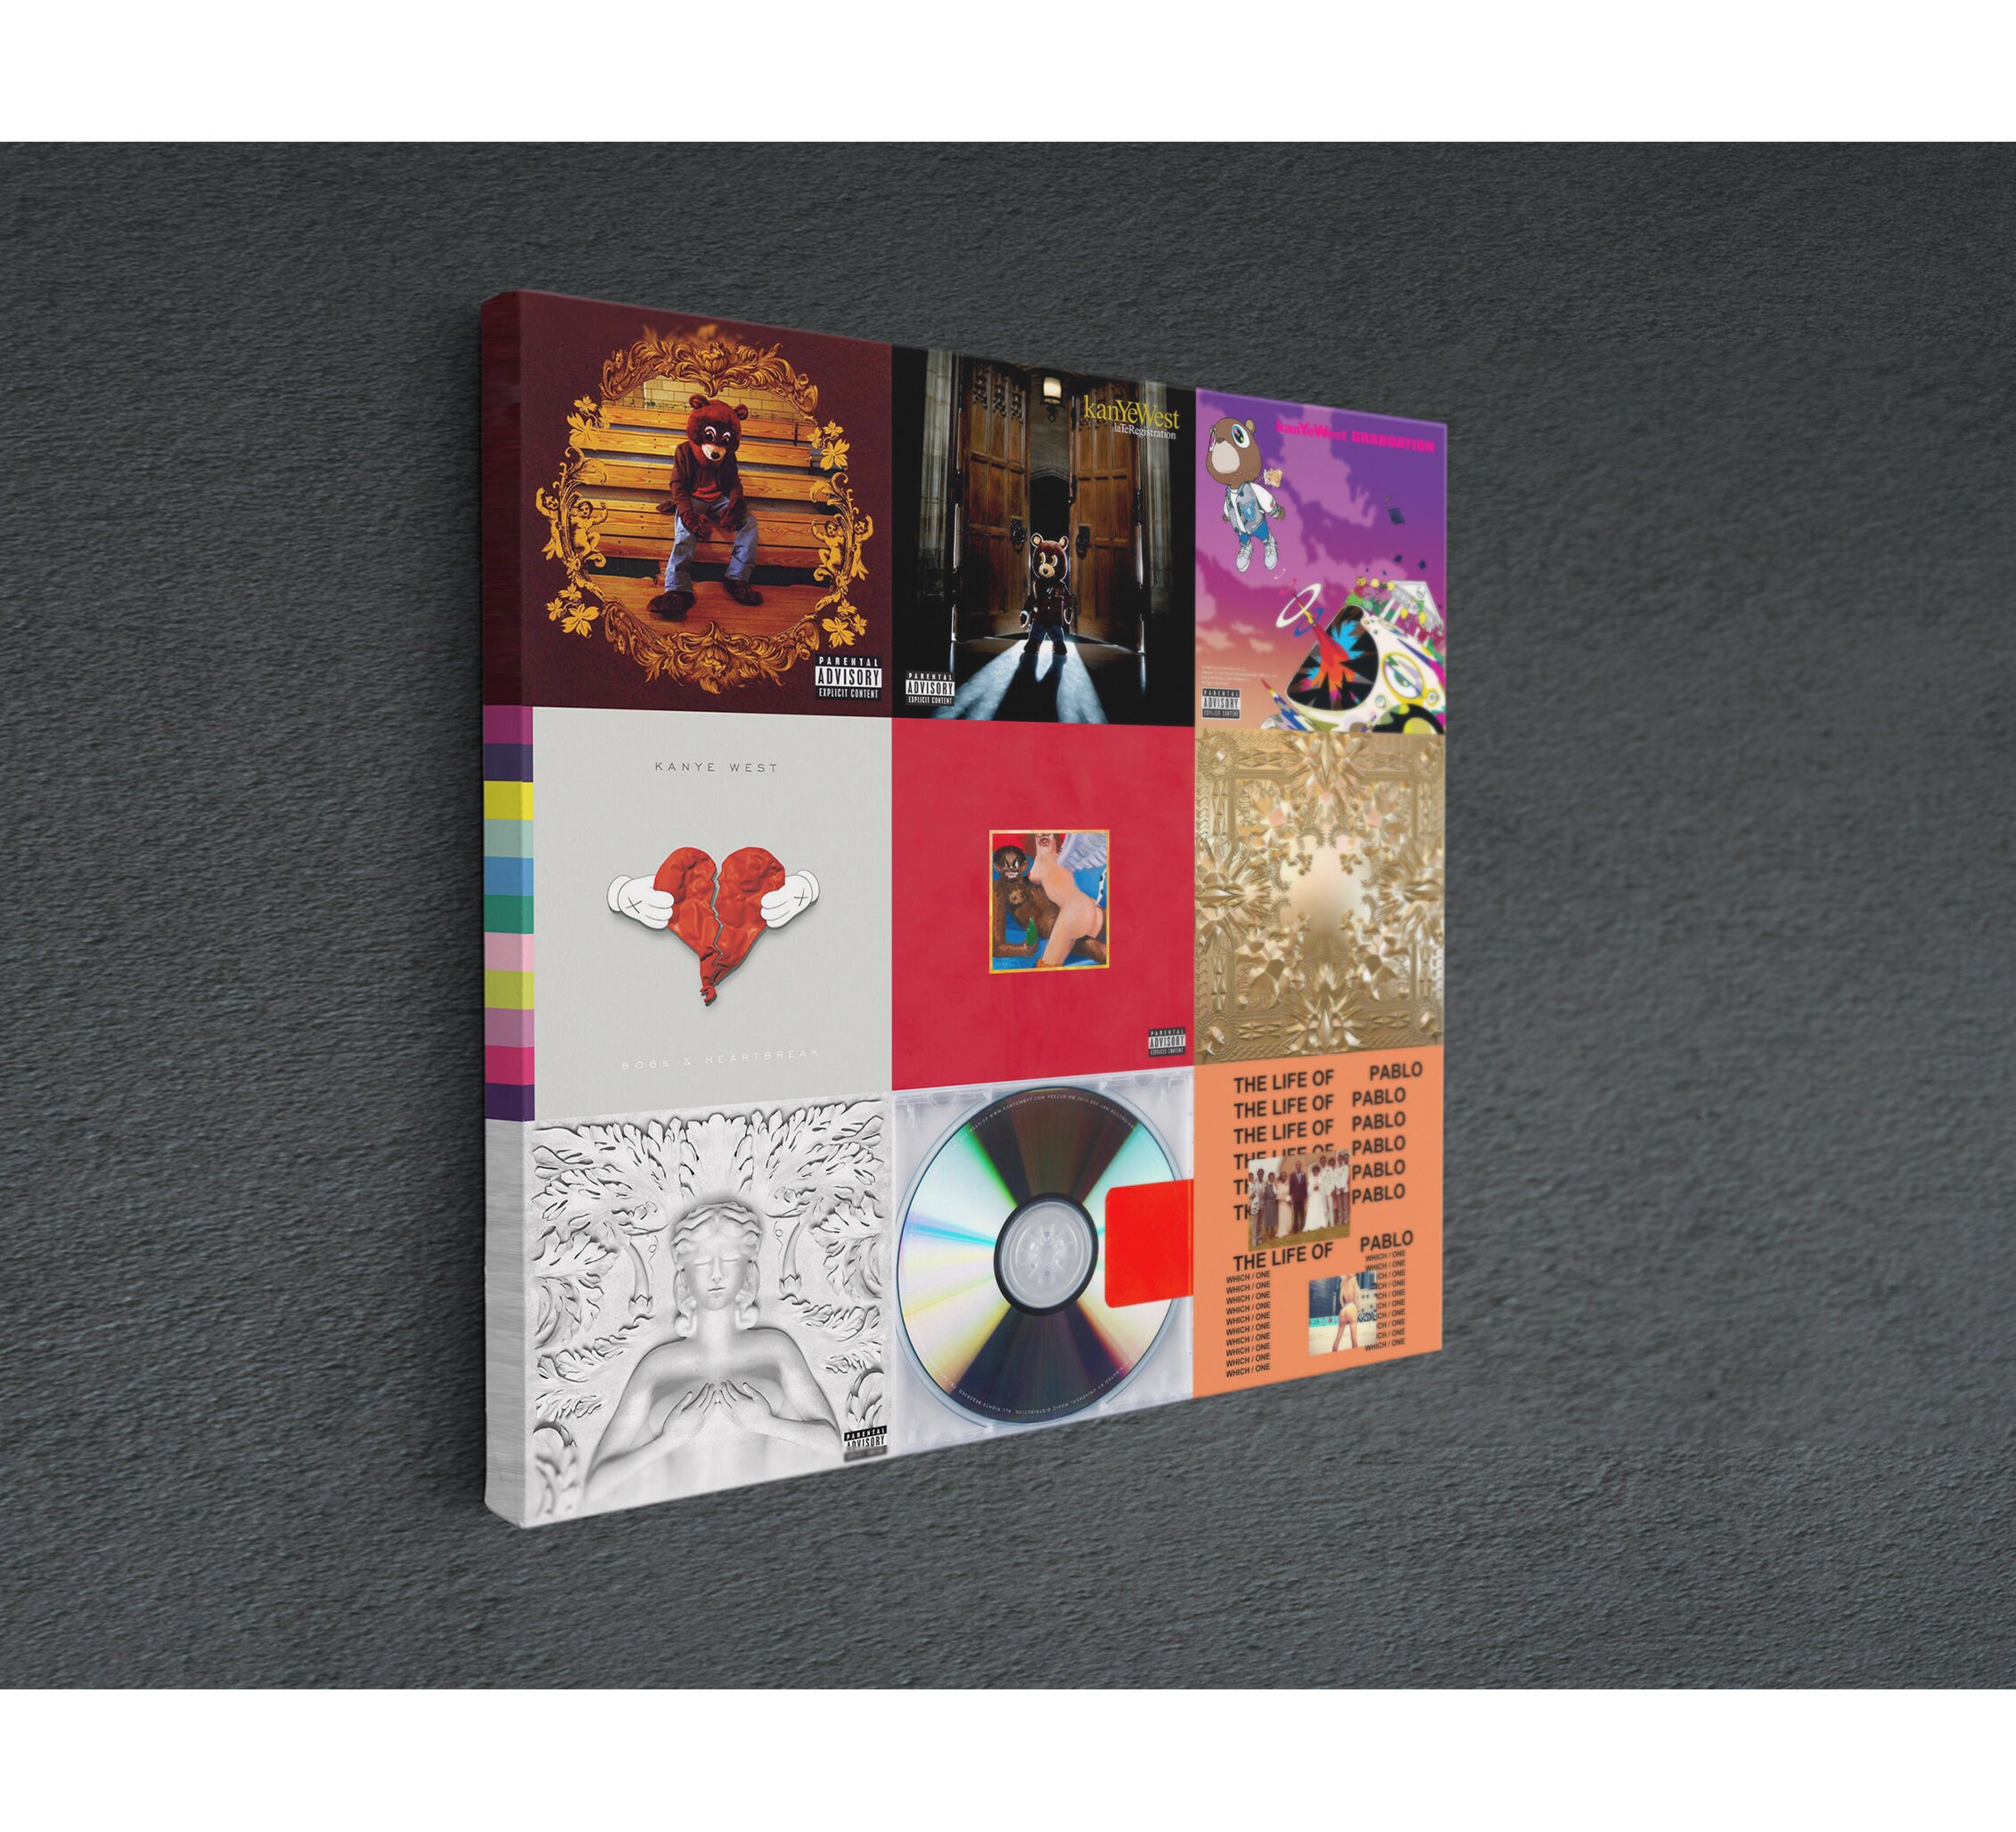 559259 Kanye West “True Love Music Album HD Cover Art 24x18 WALL PRINT  POSTER